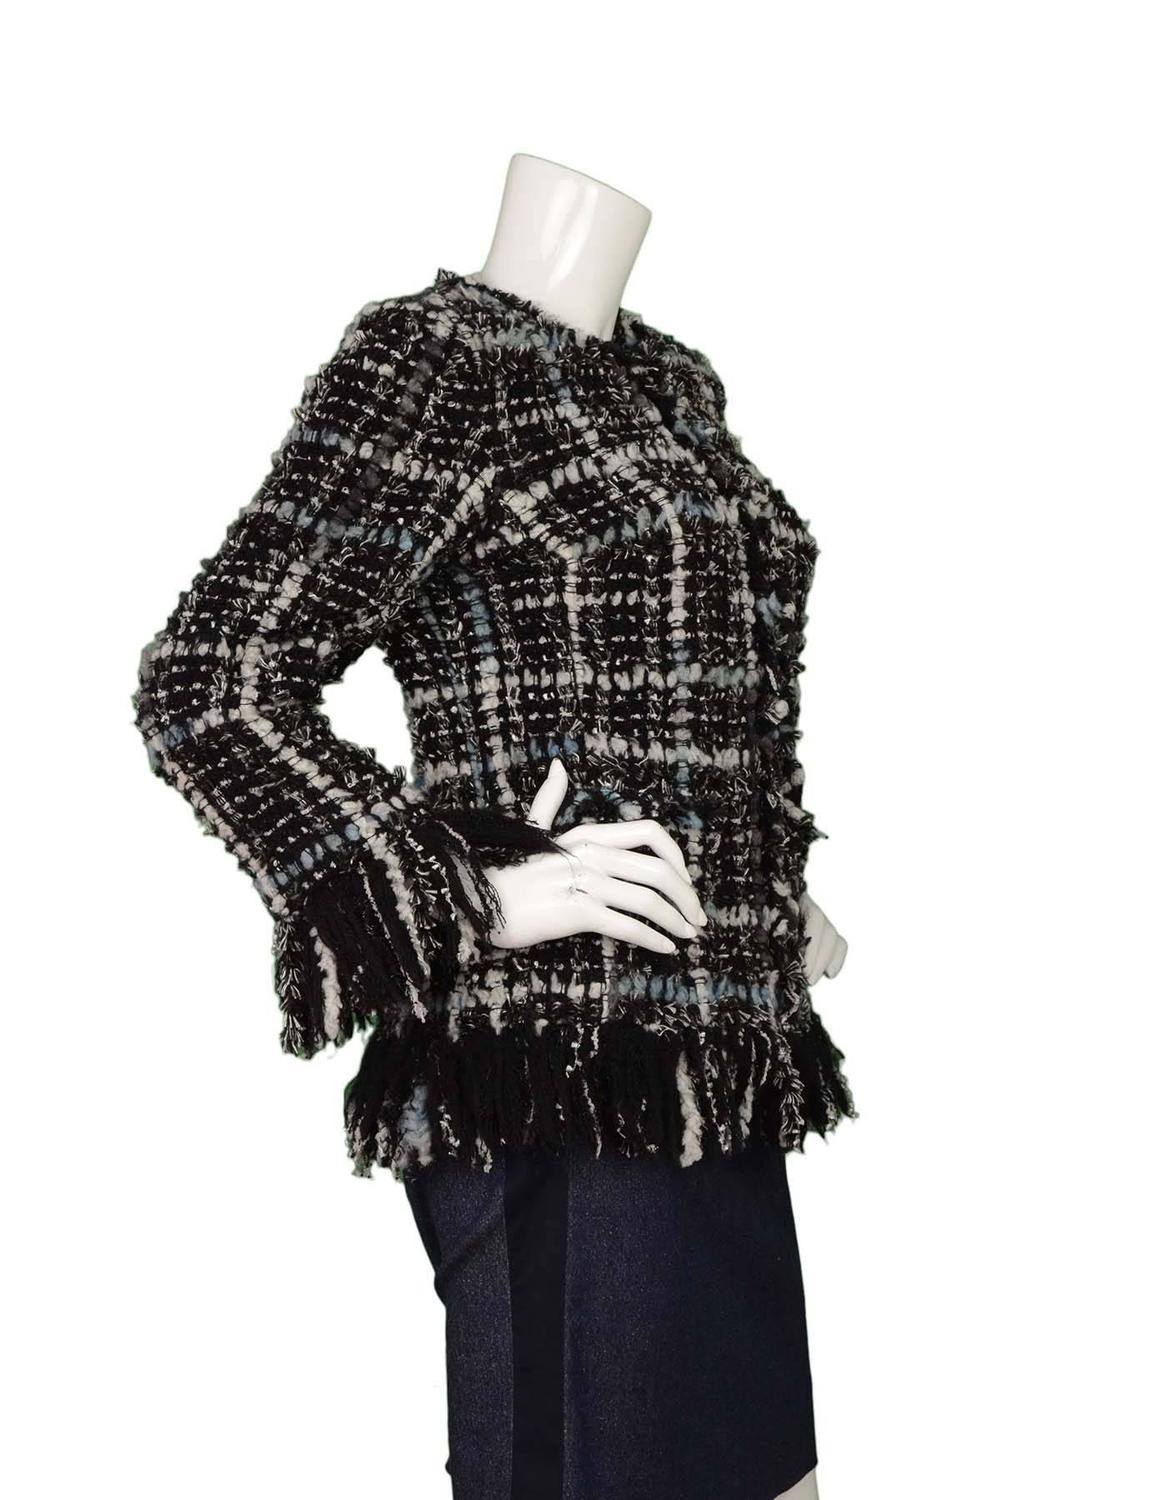 Chanel Black and Blue Tweed Wool Fringe Jacket SZ 42 at 1stdibs